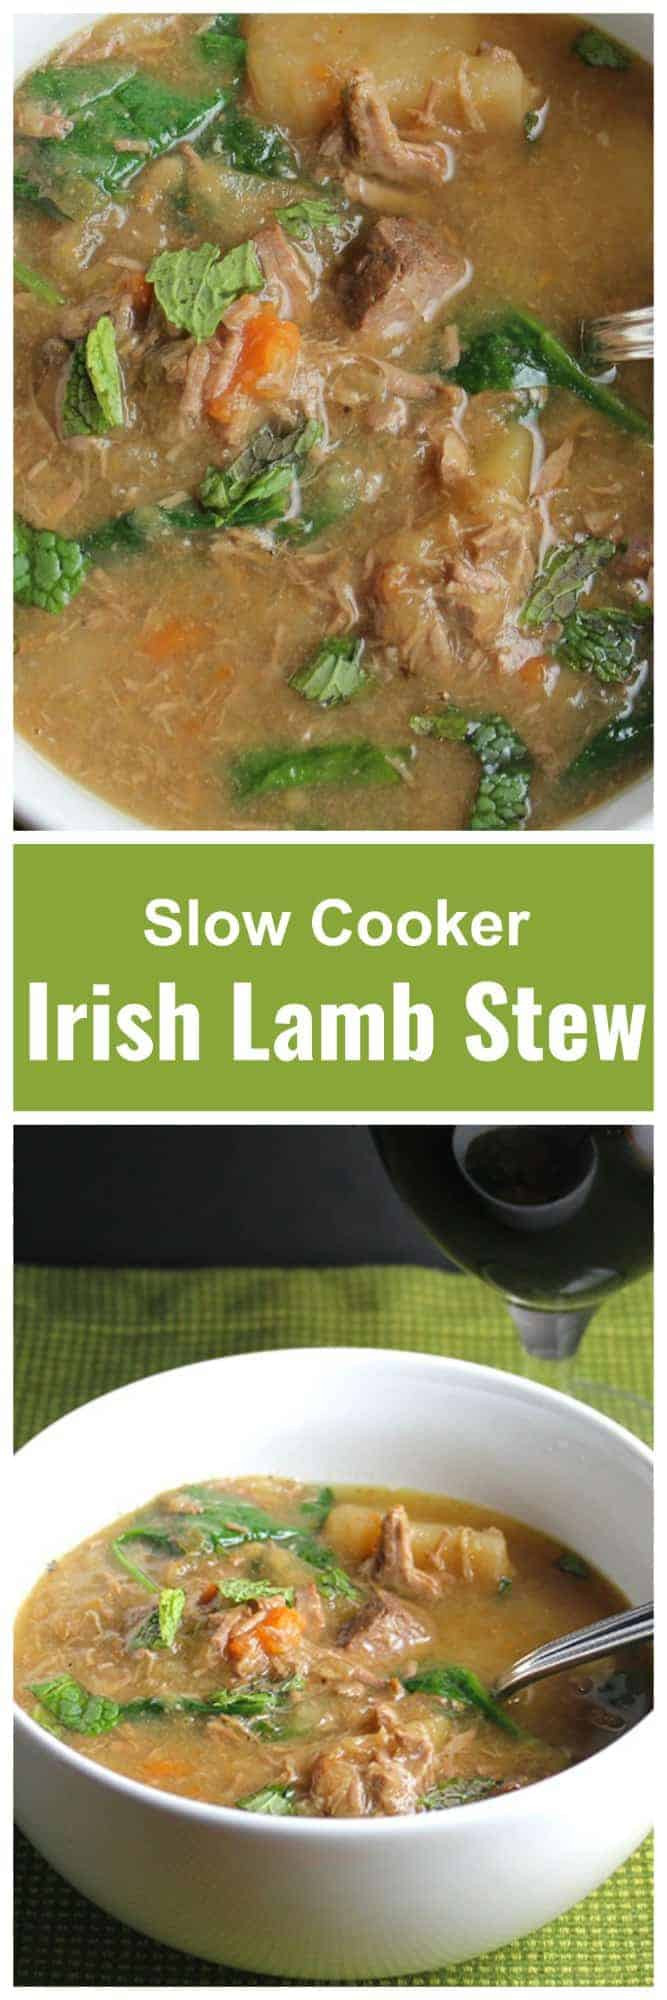 Irish Lamb Stew Recipe Slow Cooker
 Slow Cooker Irish Lamb Stew SundaySupper